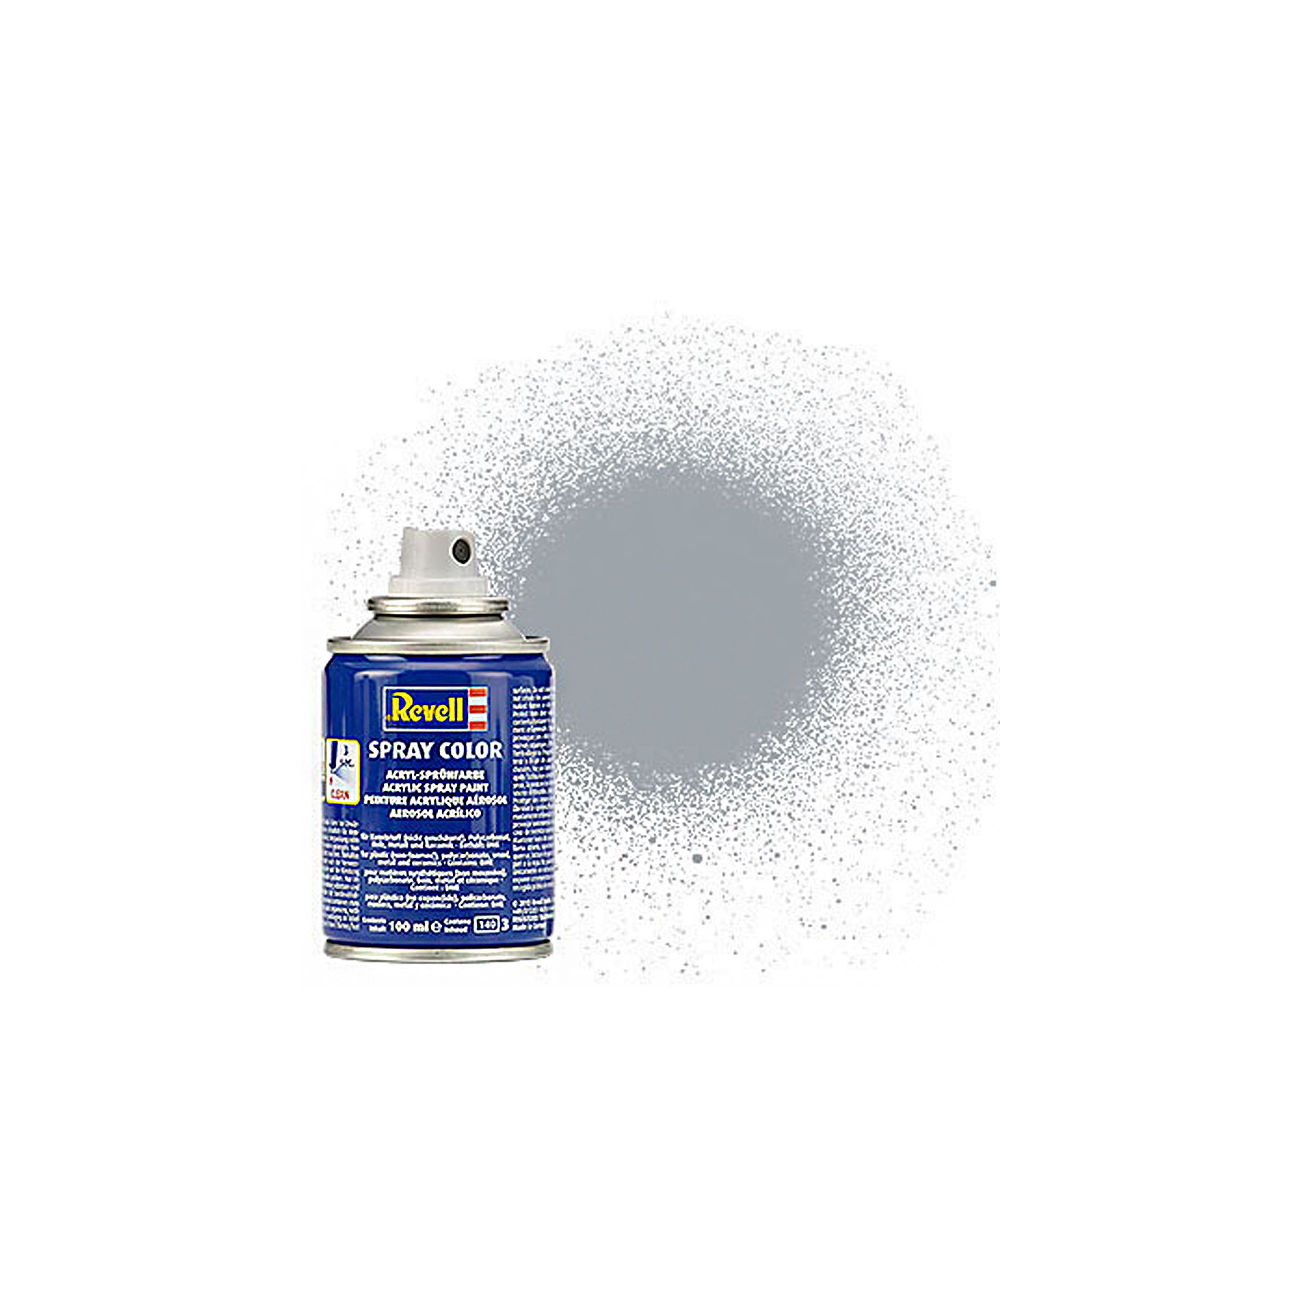 Revell Acryl Spray Color Sprhdose Silber metallic 100ml 34190